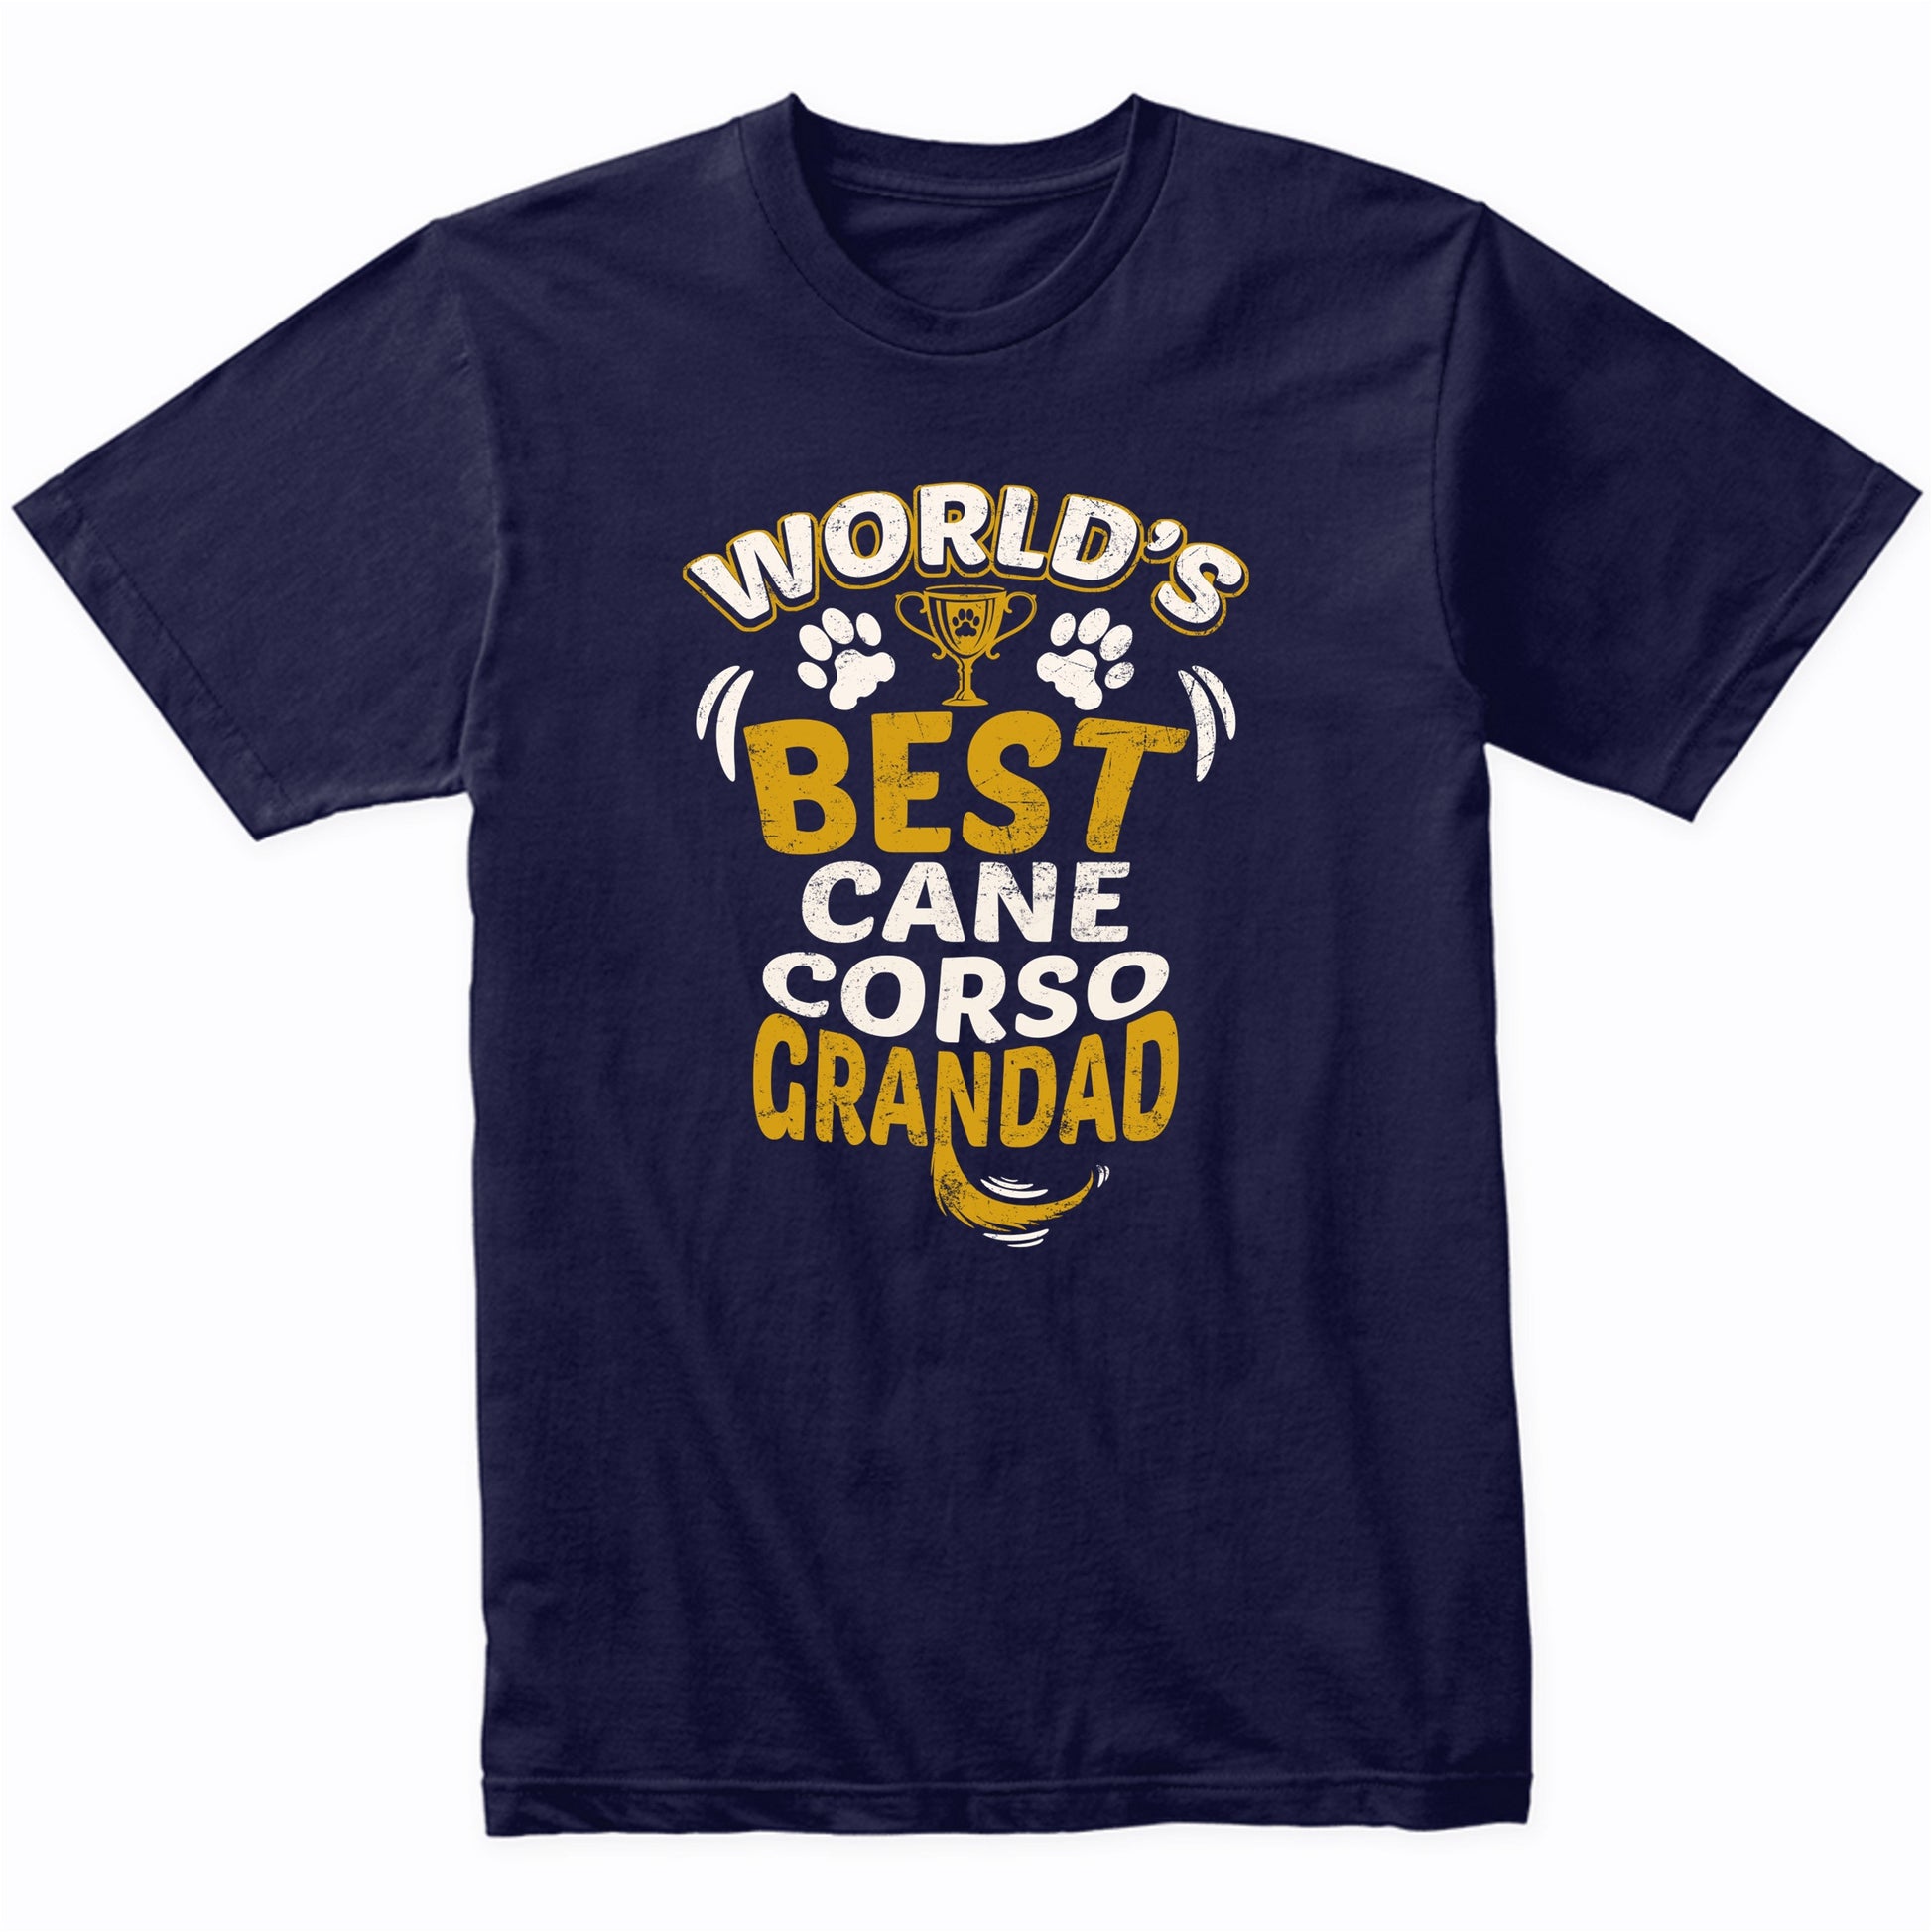 World's Best Cane Corso Grandad Graphic T-Shirt